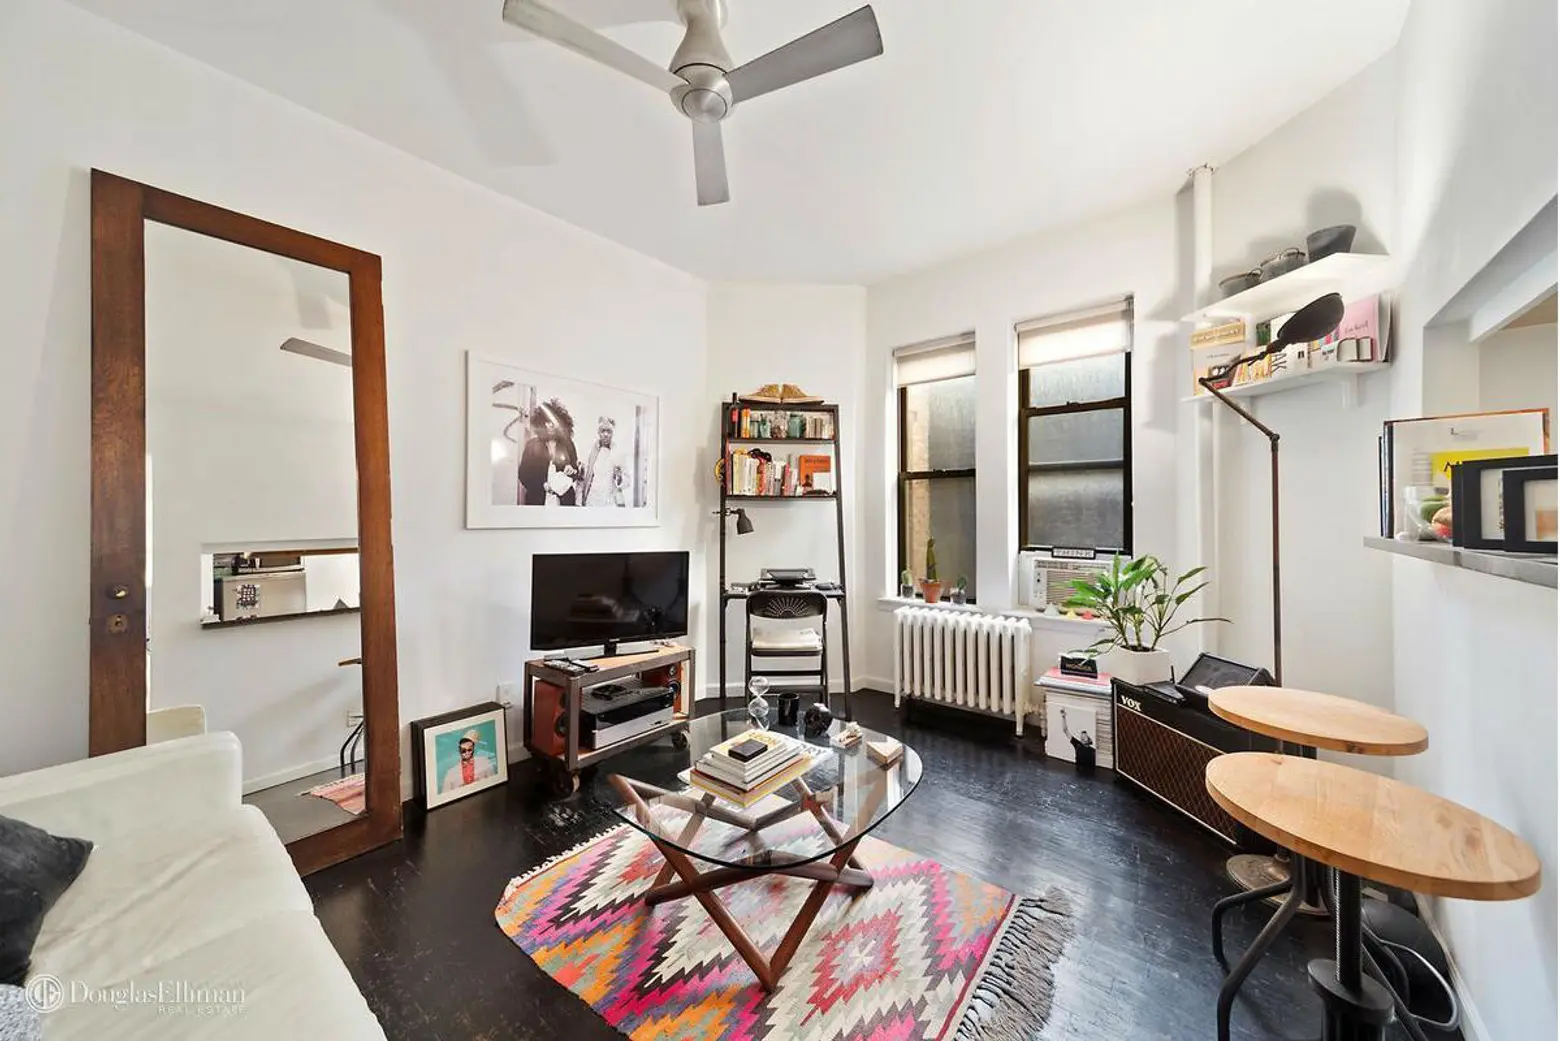 This darling prewar apartment asks $535K in the East Village